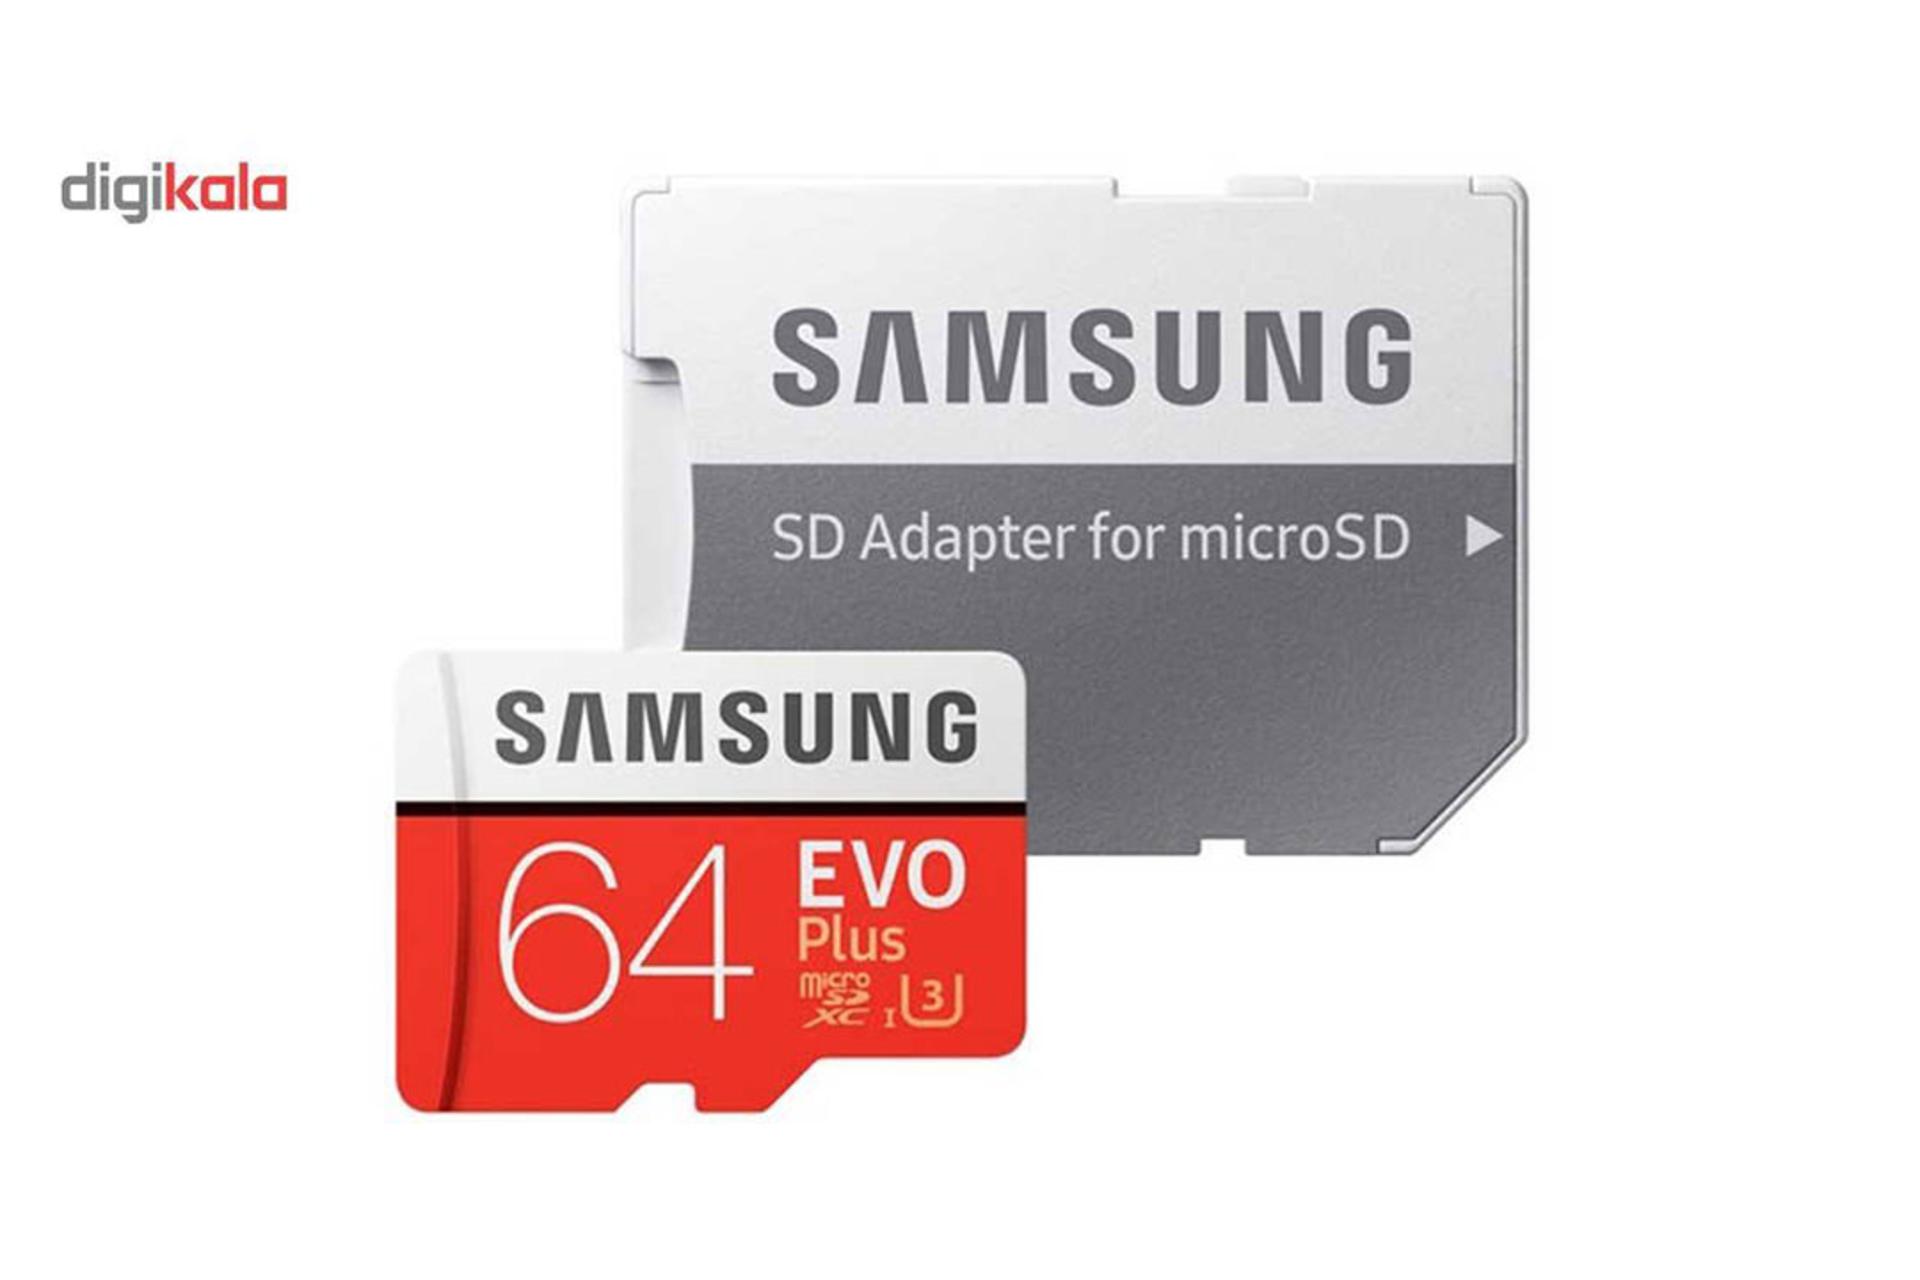 Samsung Evo Plus microSDHC Class 10 UHS-I U1 64GB